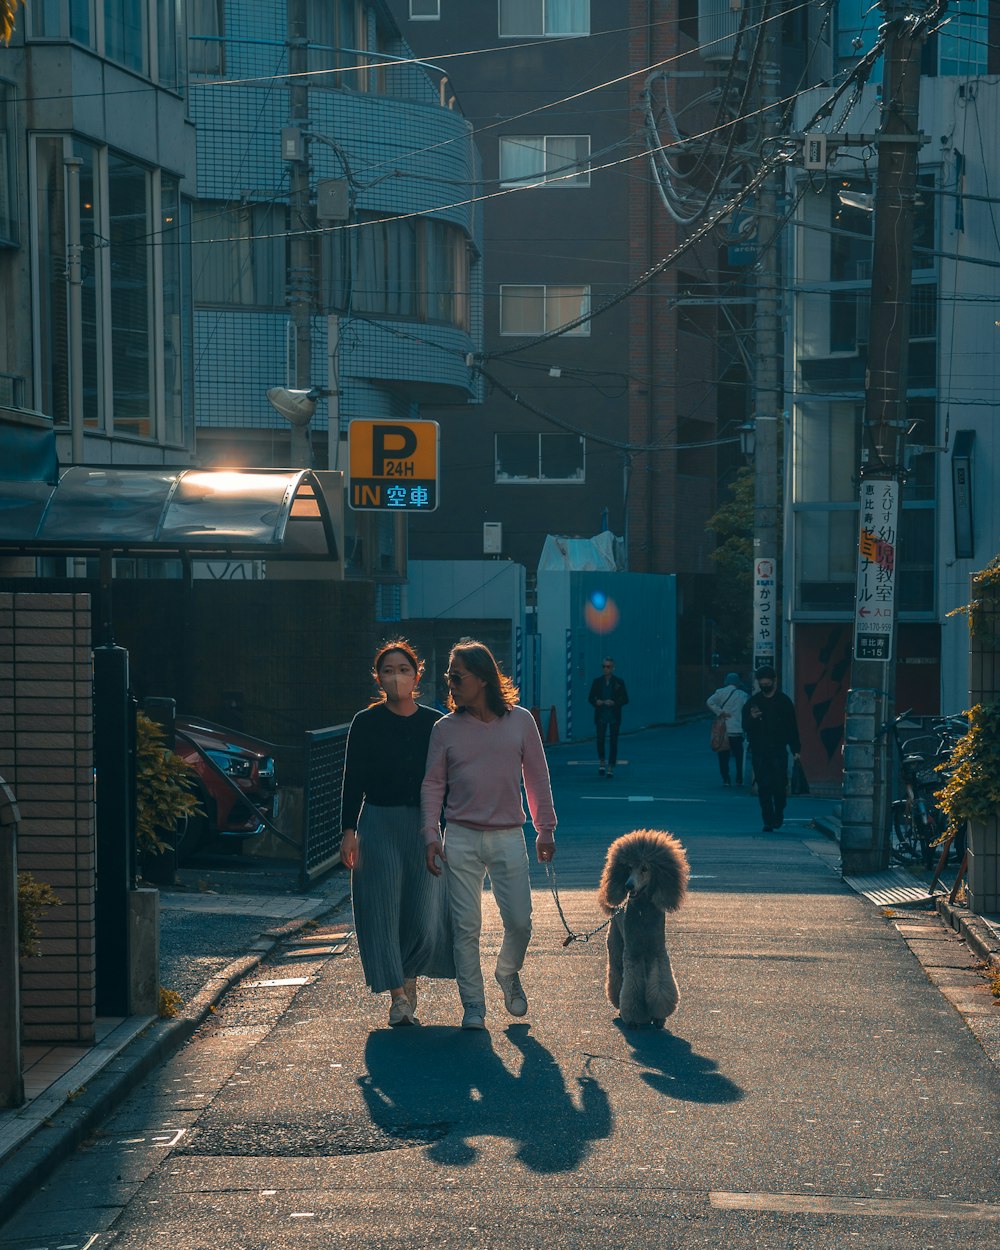 a couple of women walking a dog down a street